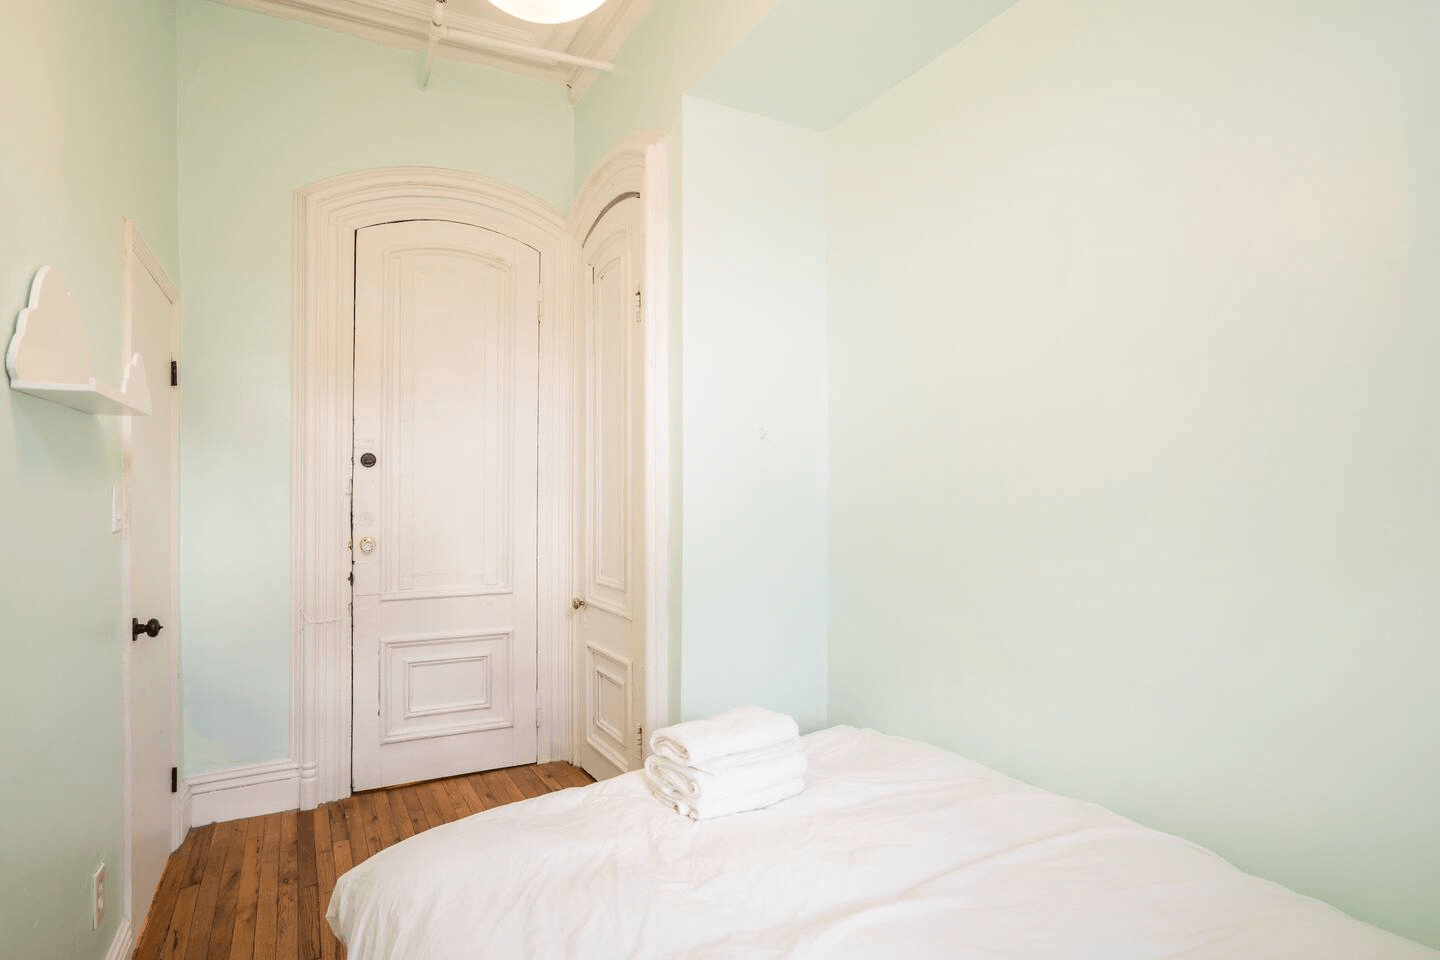 narrow bedroom with door moldings and a closet